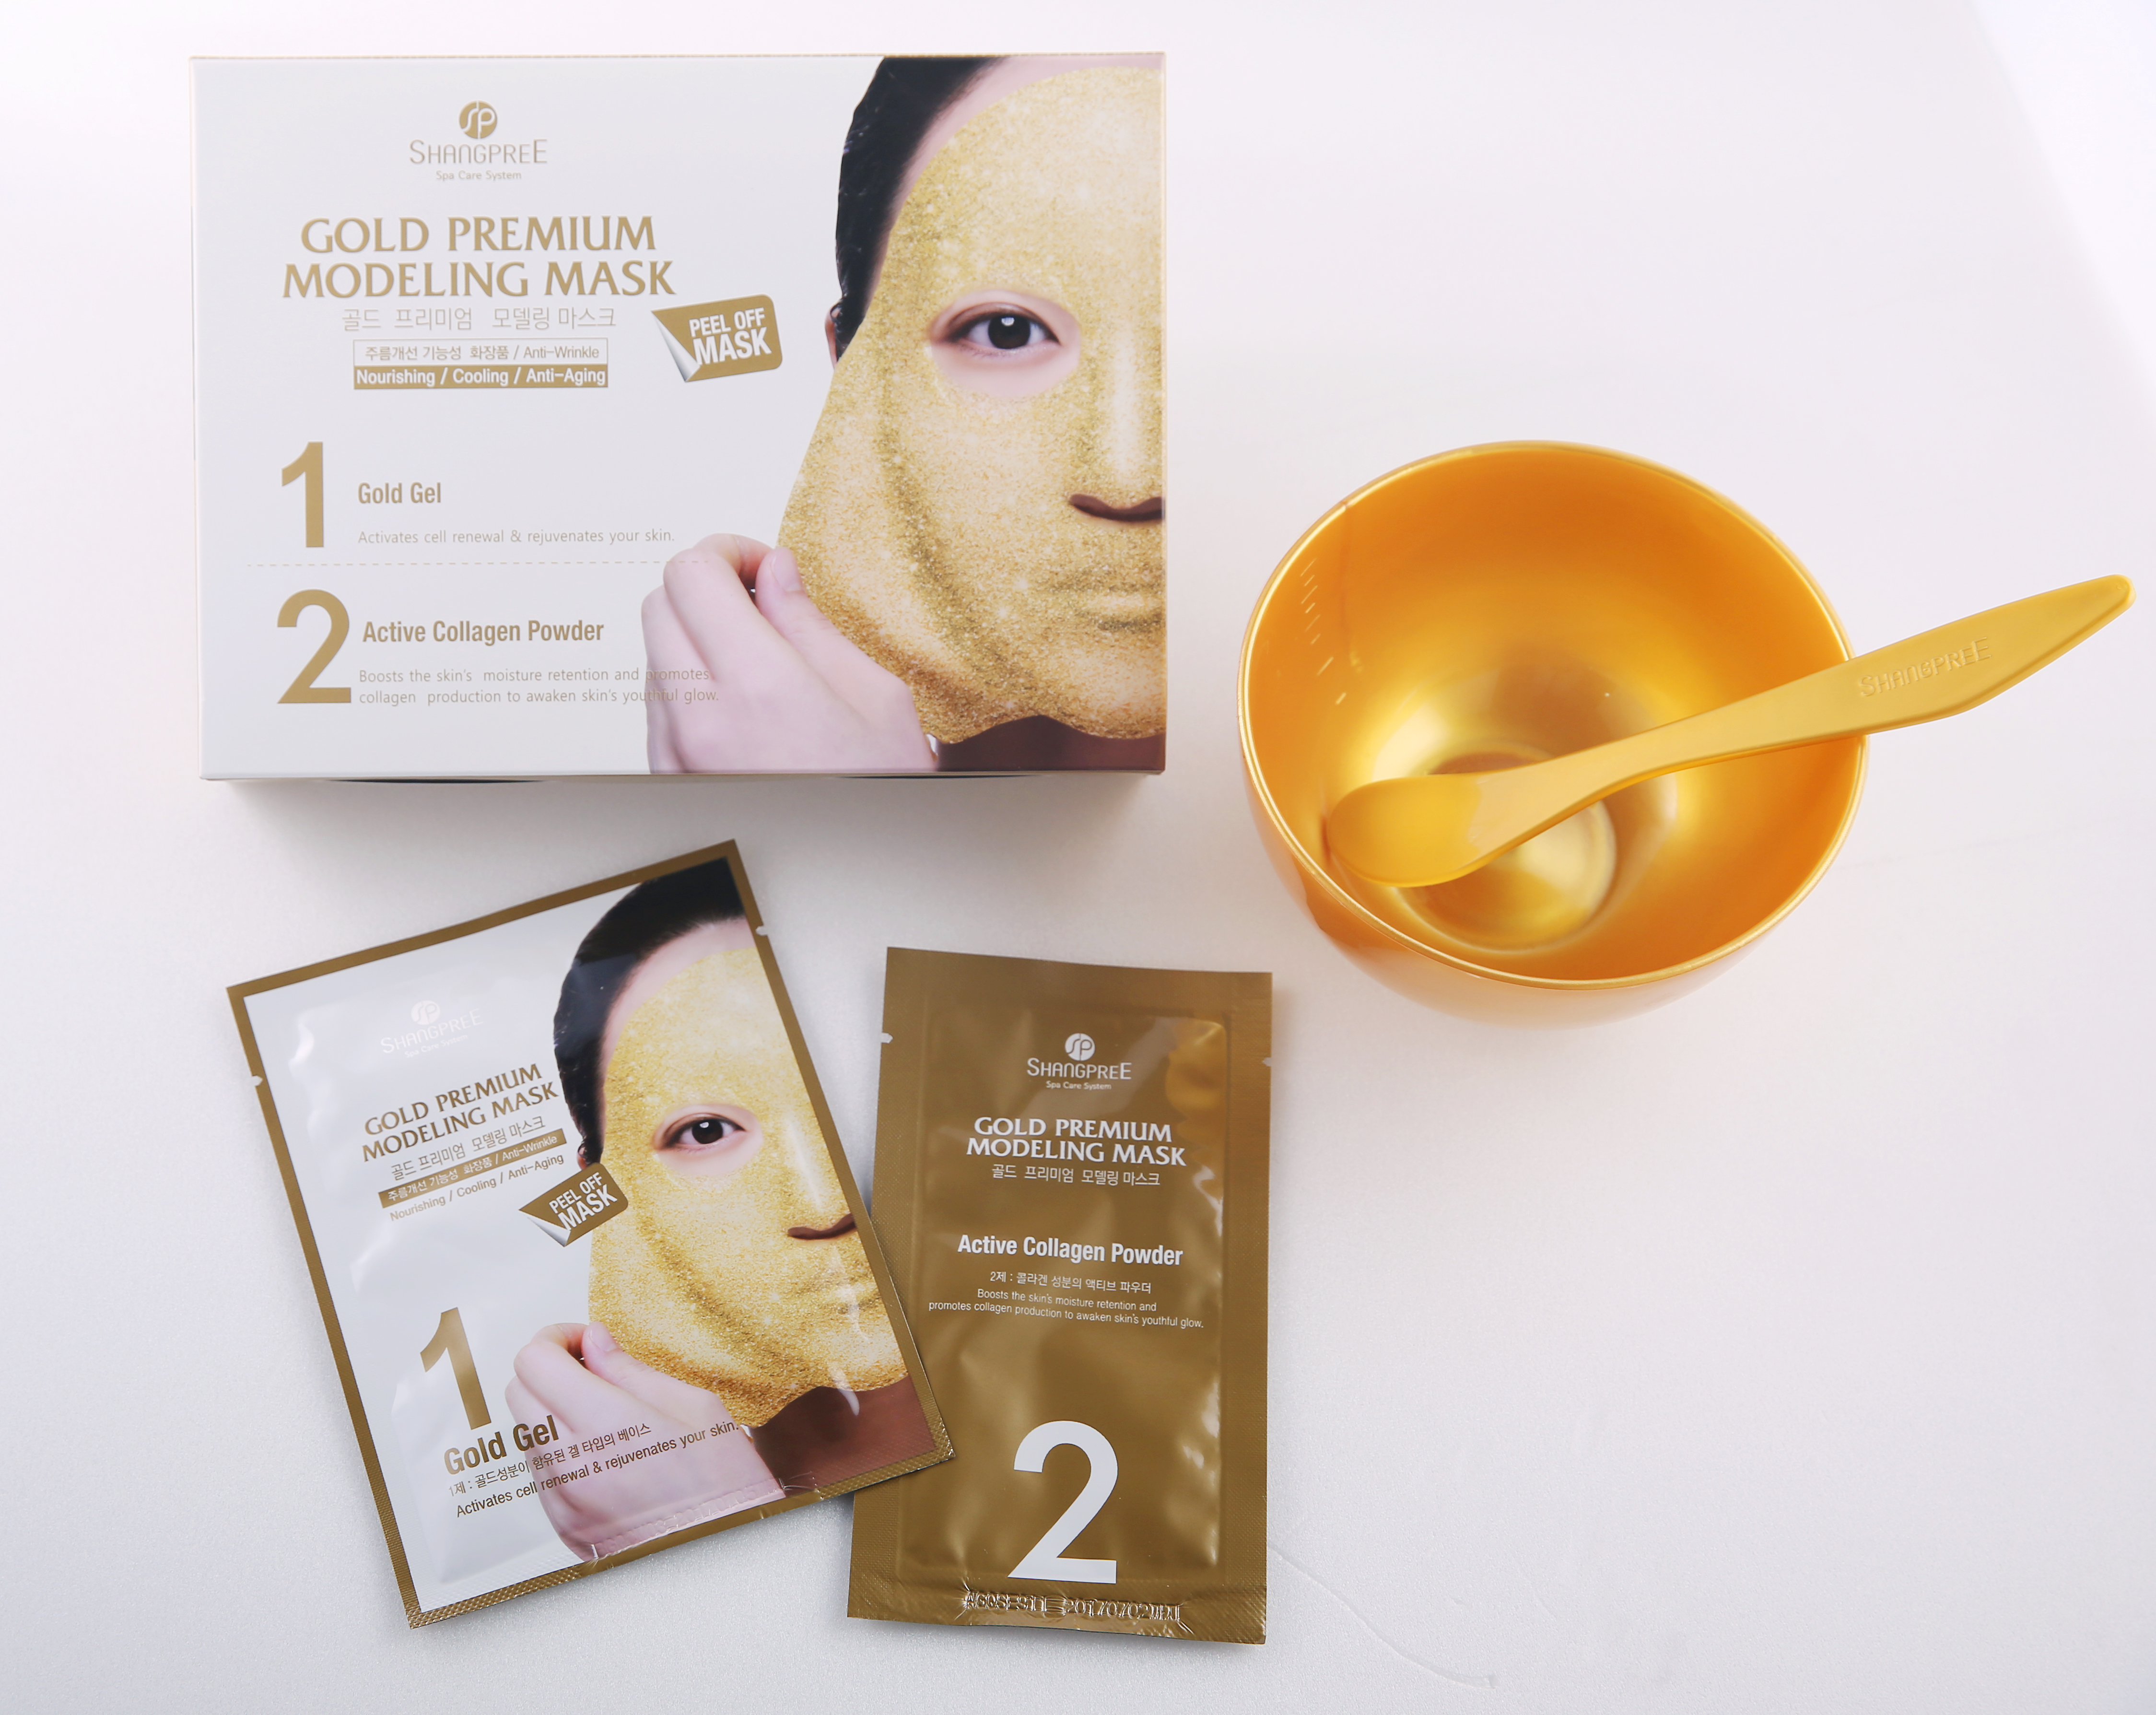 Shangpree; Gold Premium Modeling Mask